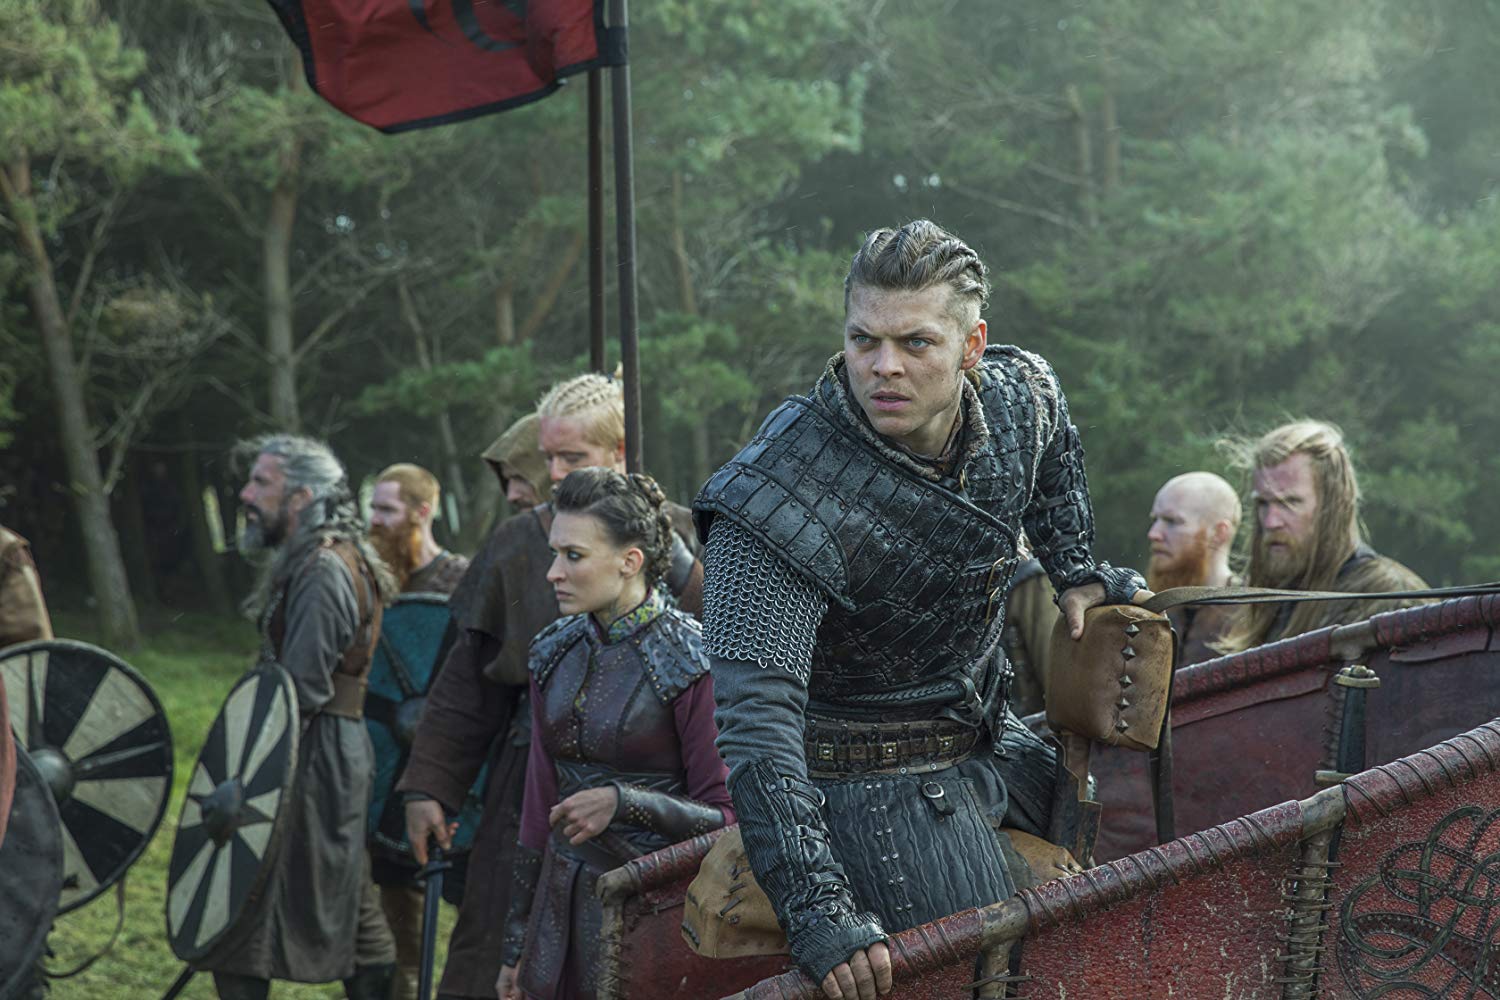 5 fiercest Viking warriors: From Harald Hardrada to Ivar the boneless